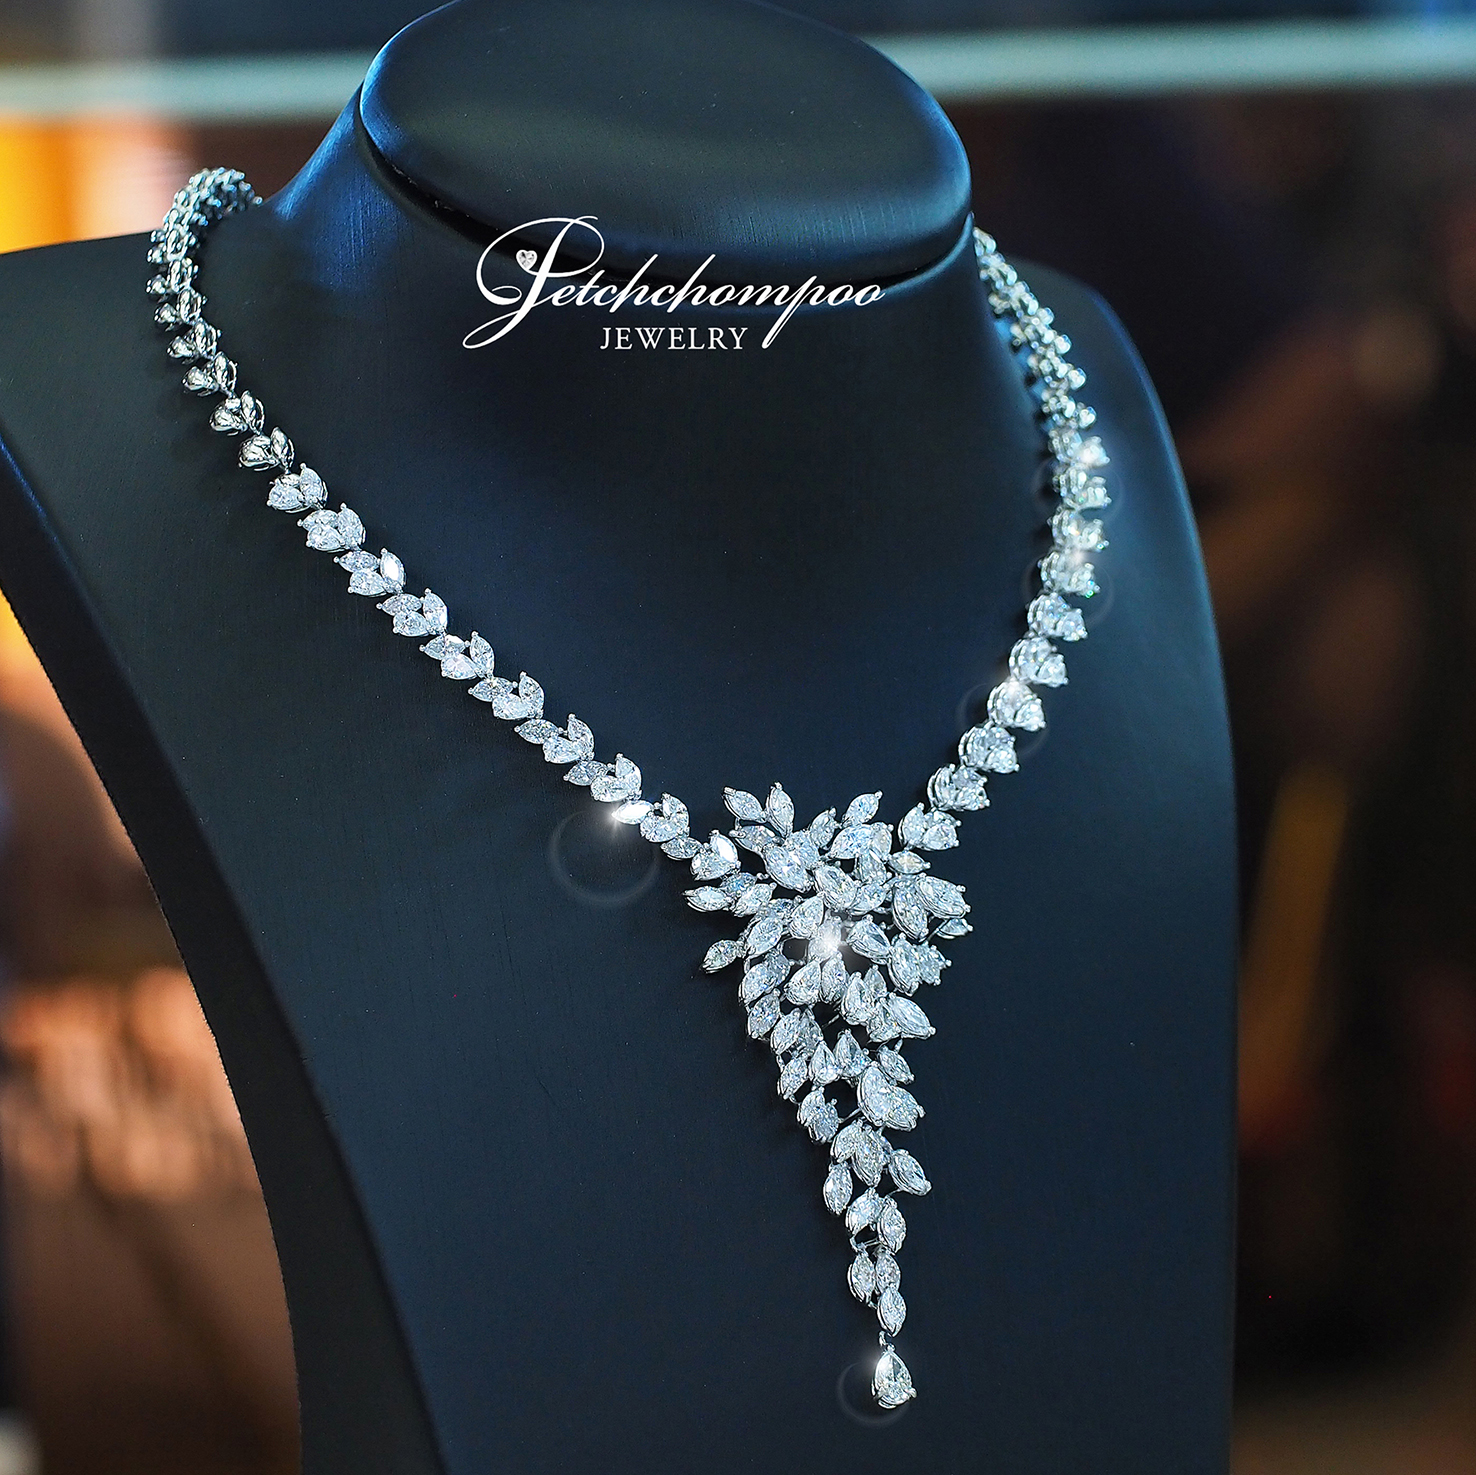 [27259] Diamond pendant necklace 19.01 carats  990,000 